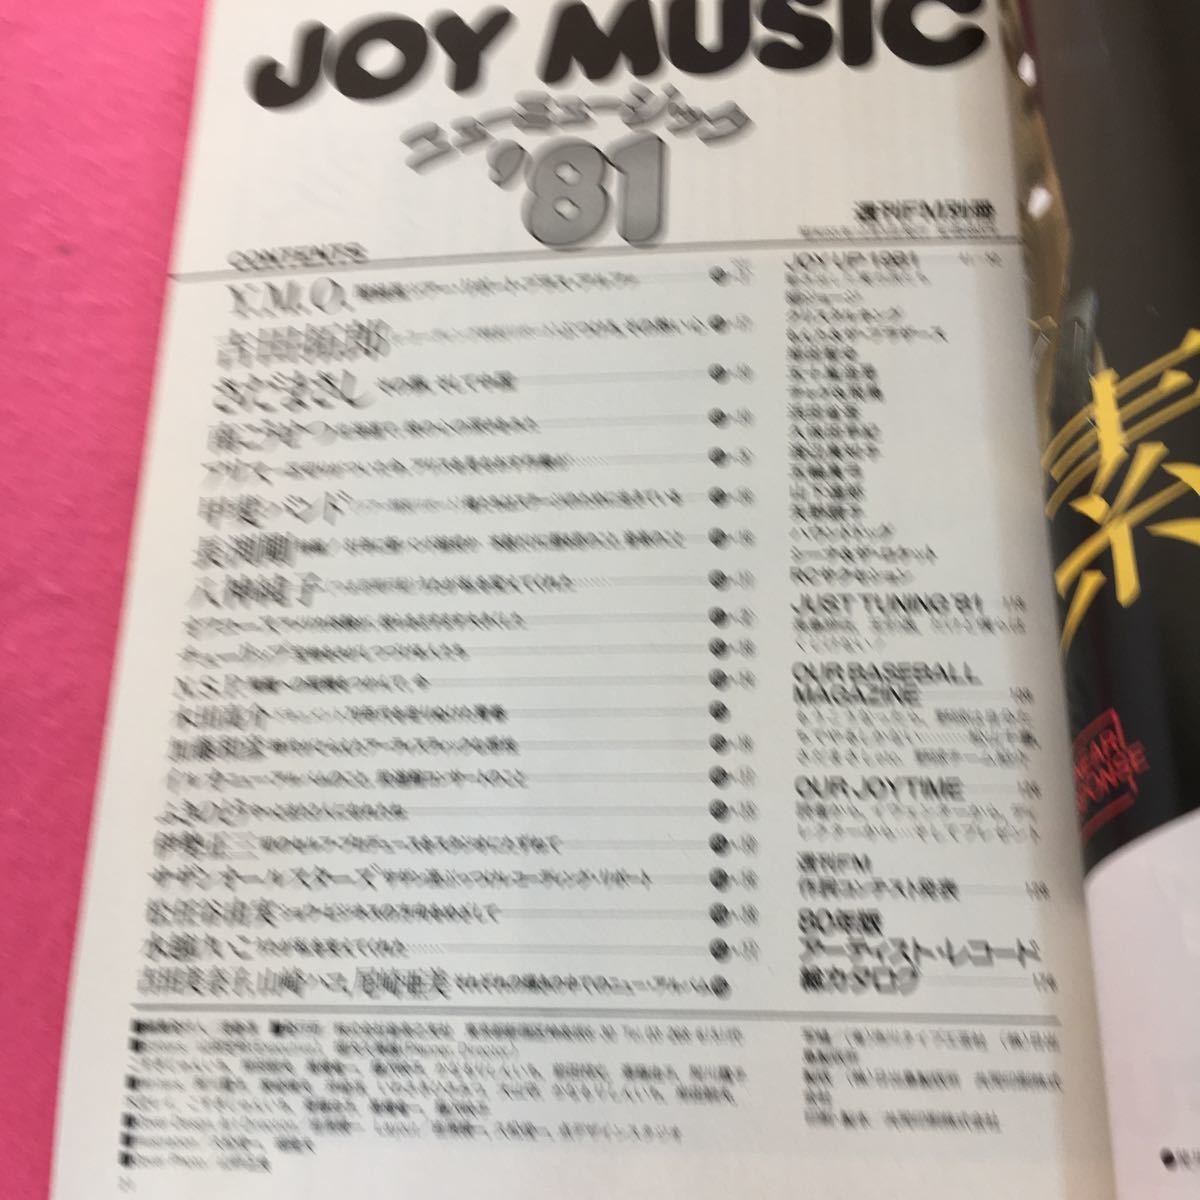 05-108 weekly FM separate volume Joy music new music 1981 music .. company 